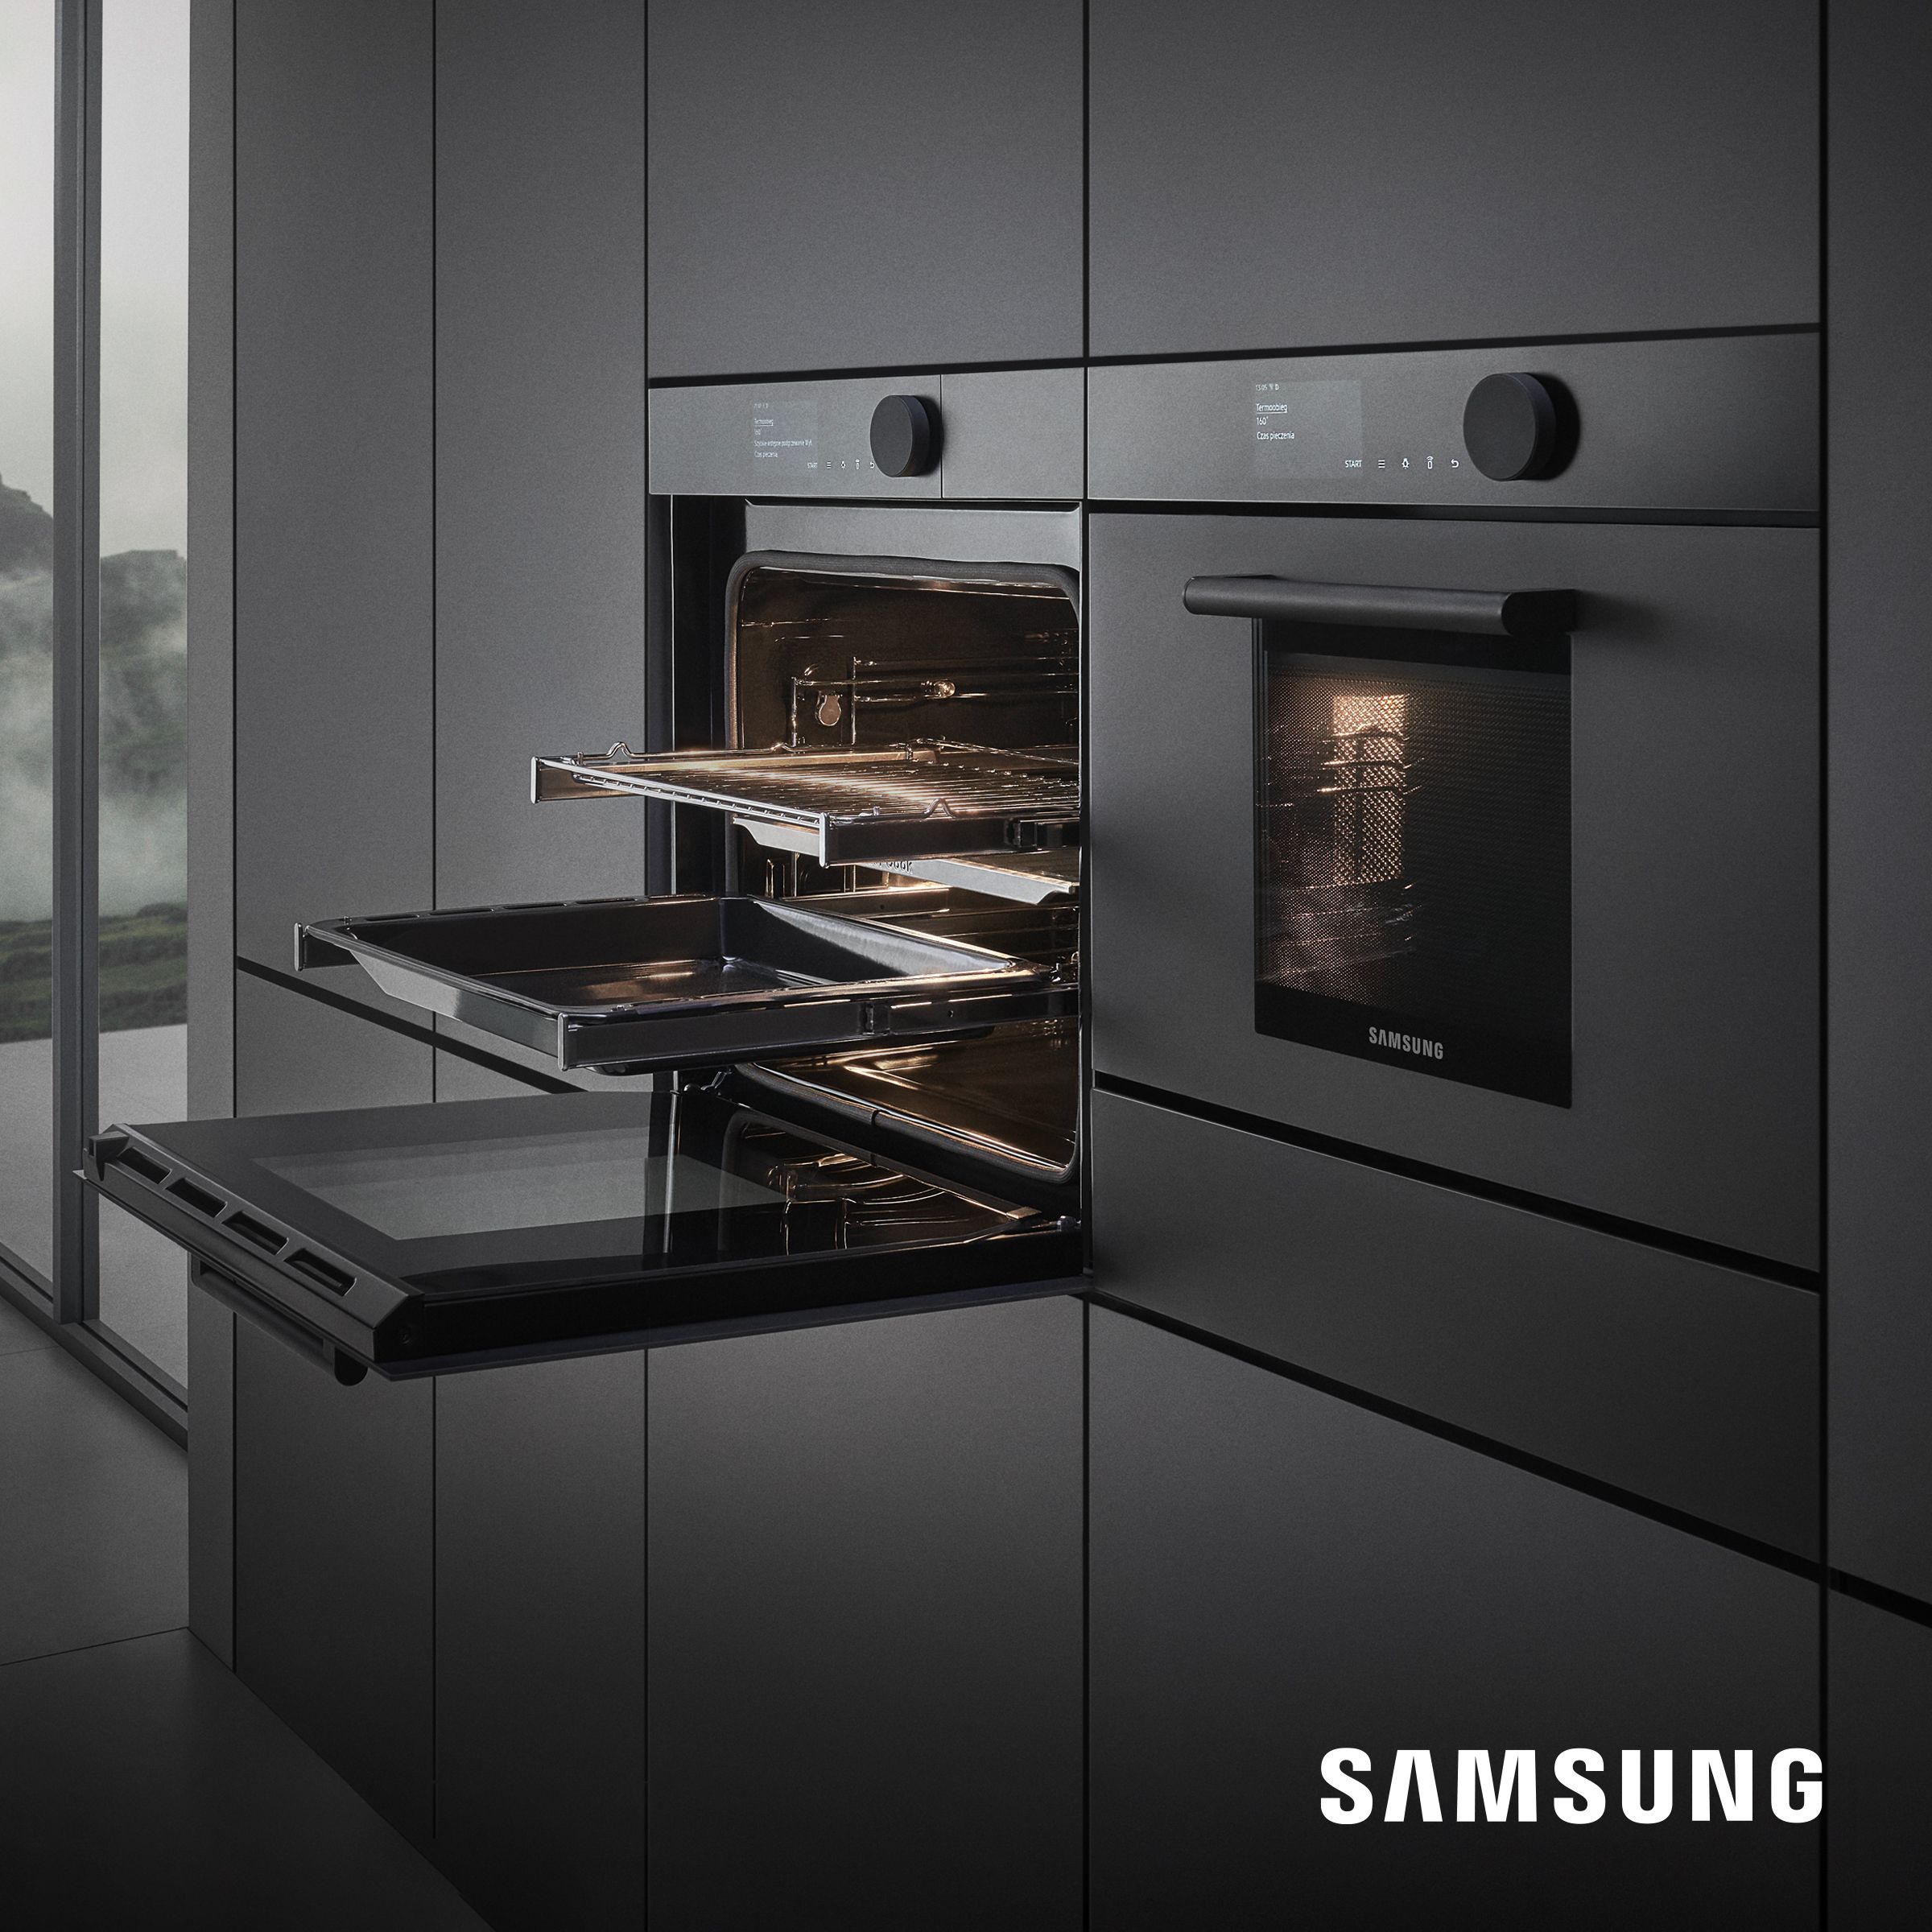 Samsung cooking